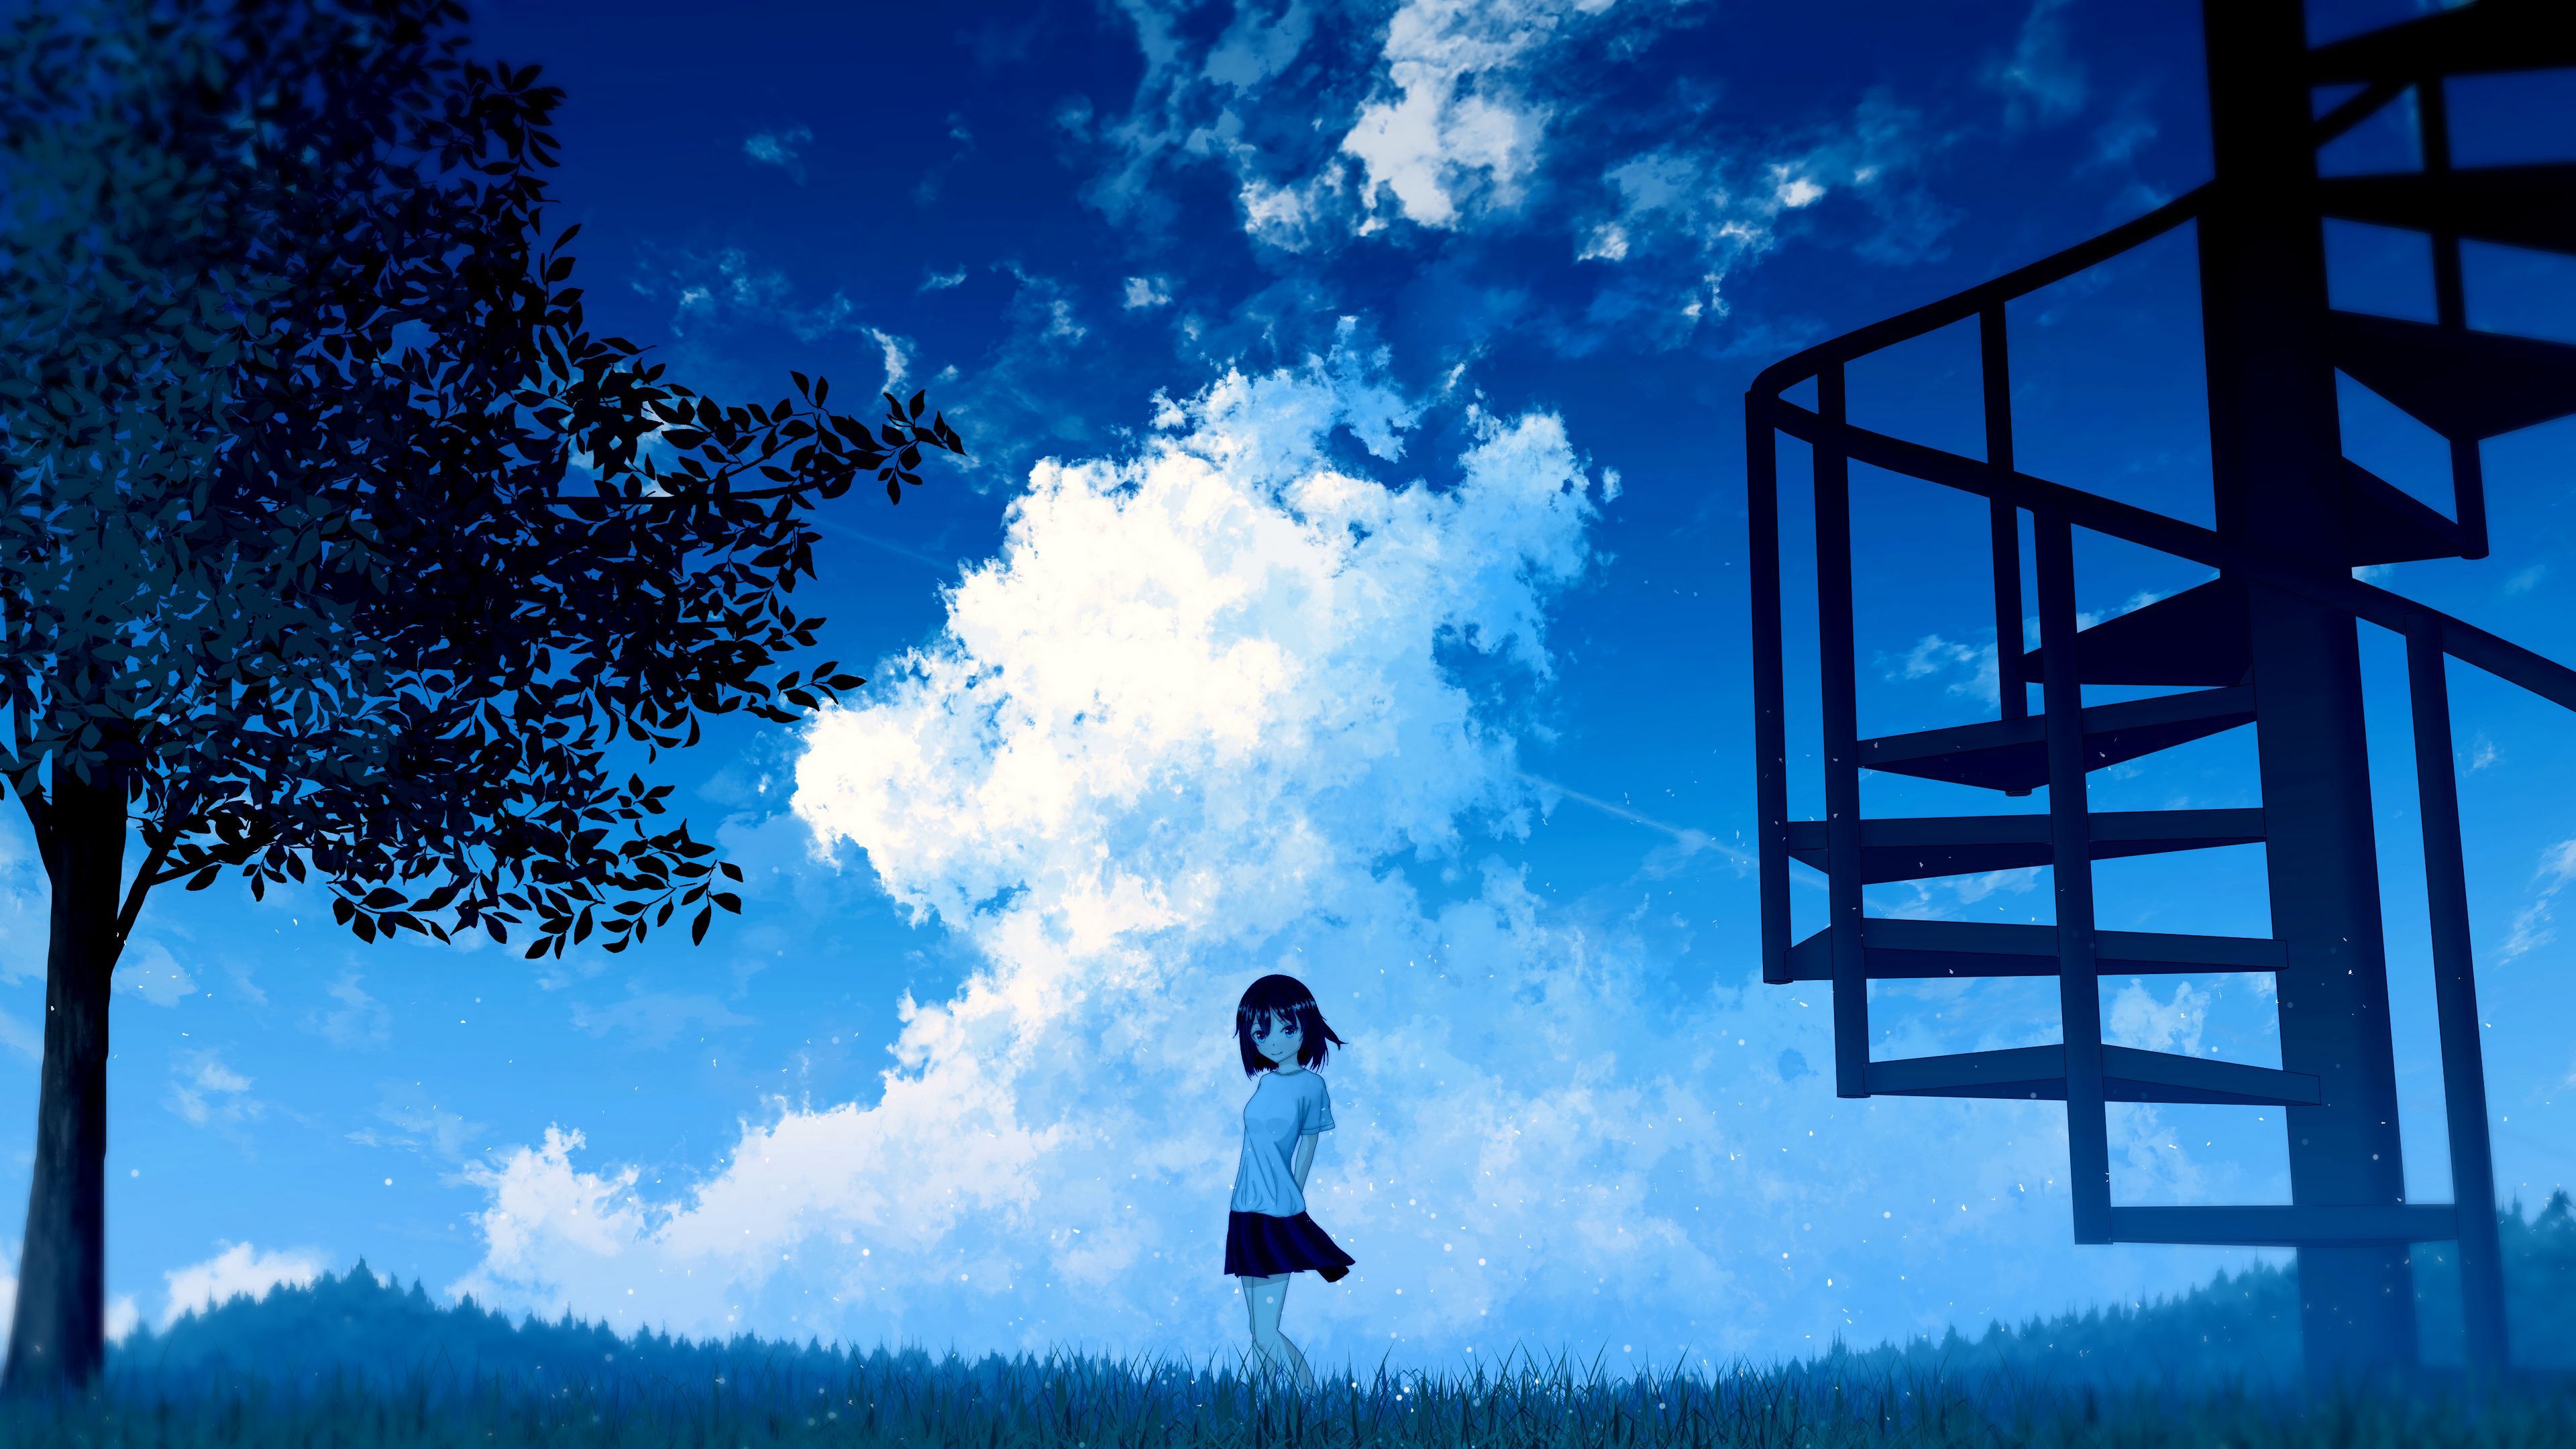 Download wallpaper 3840x2160 anime, girl, sky, clouds 4k uhd 16:9